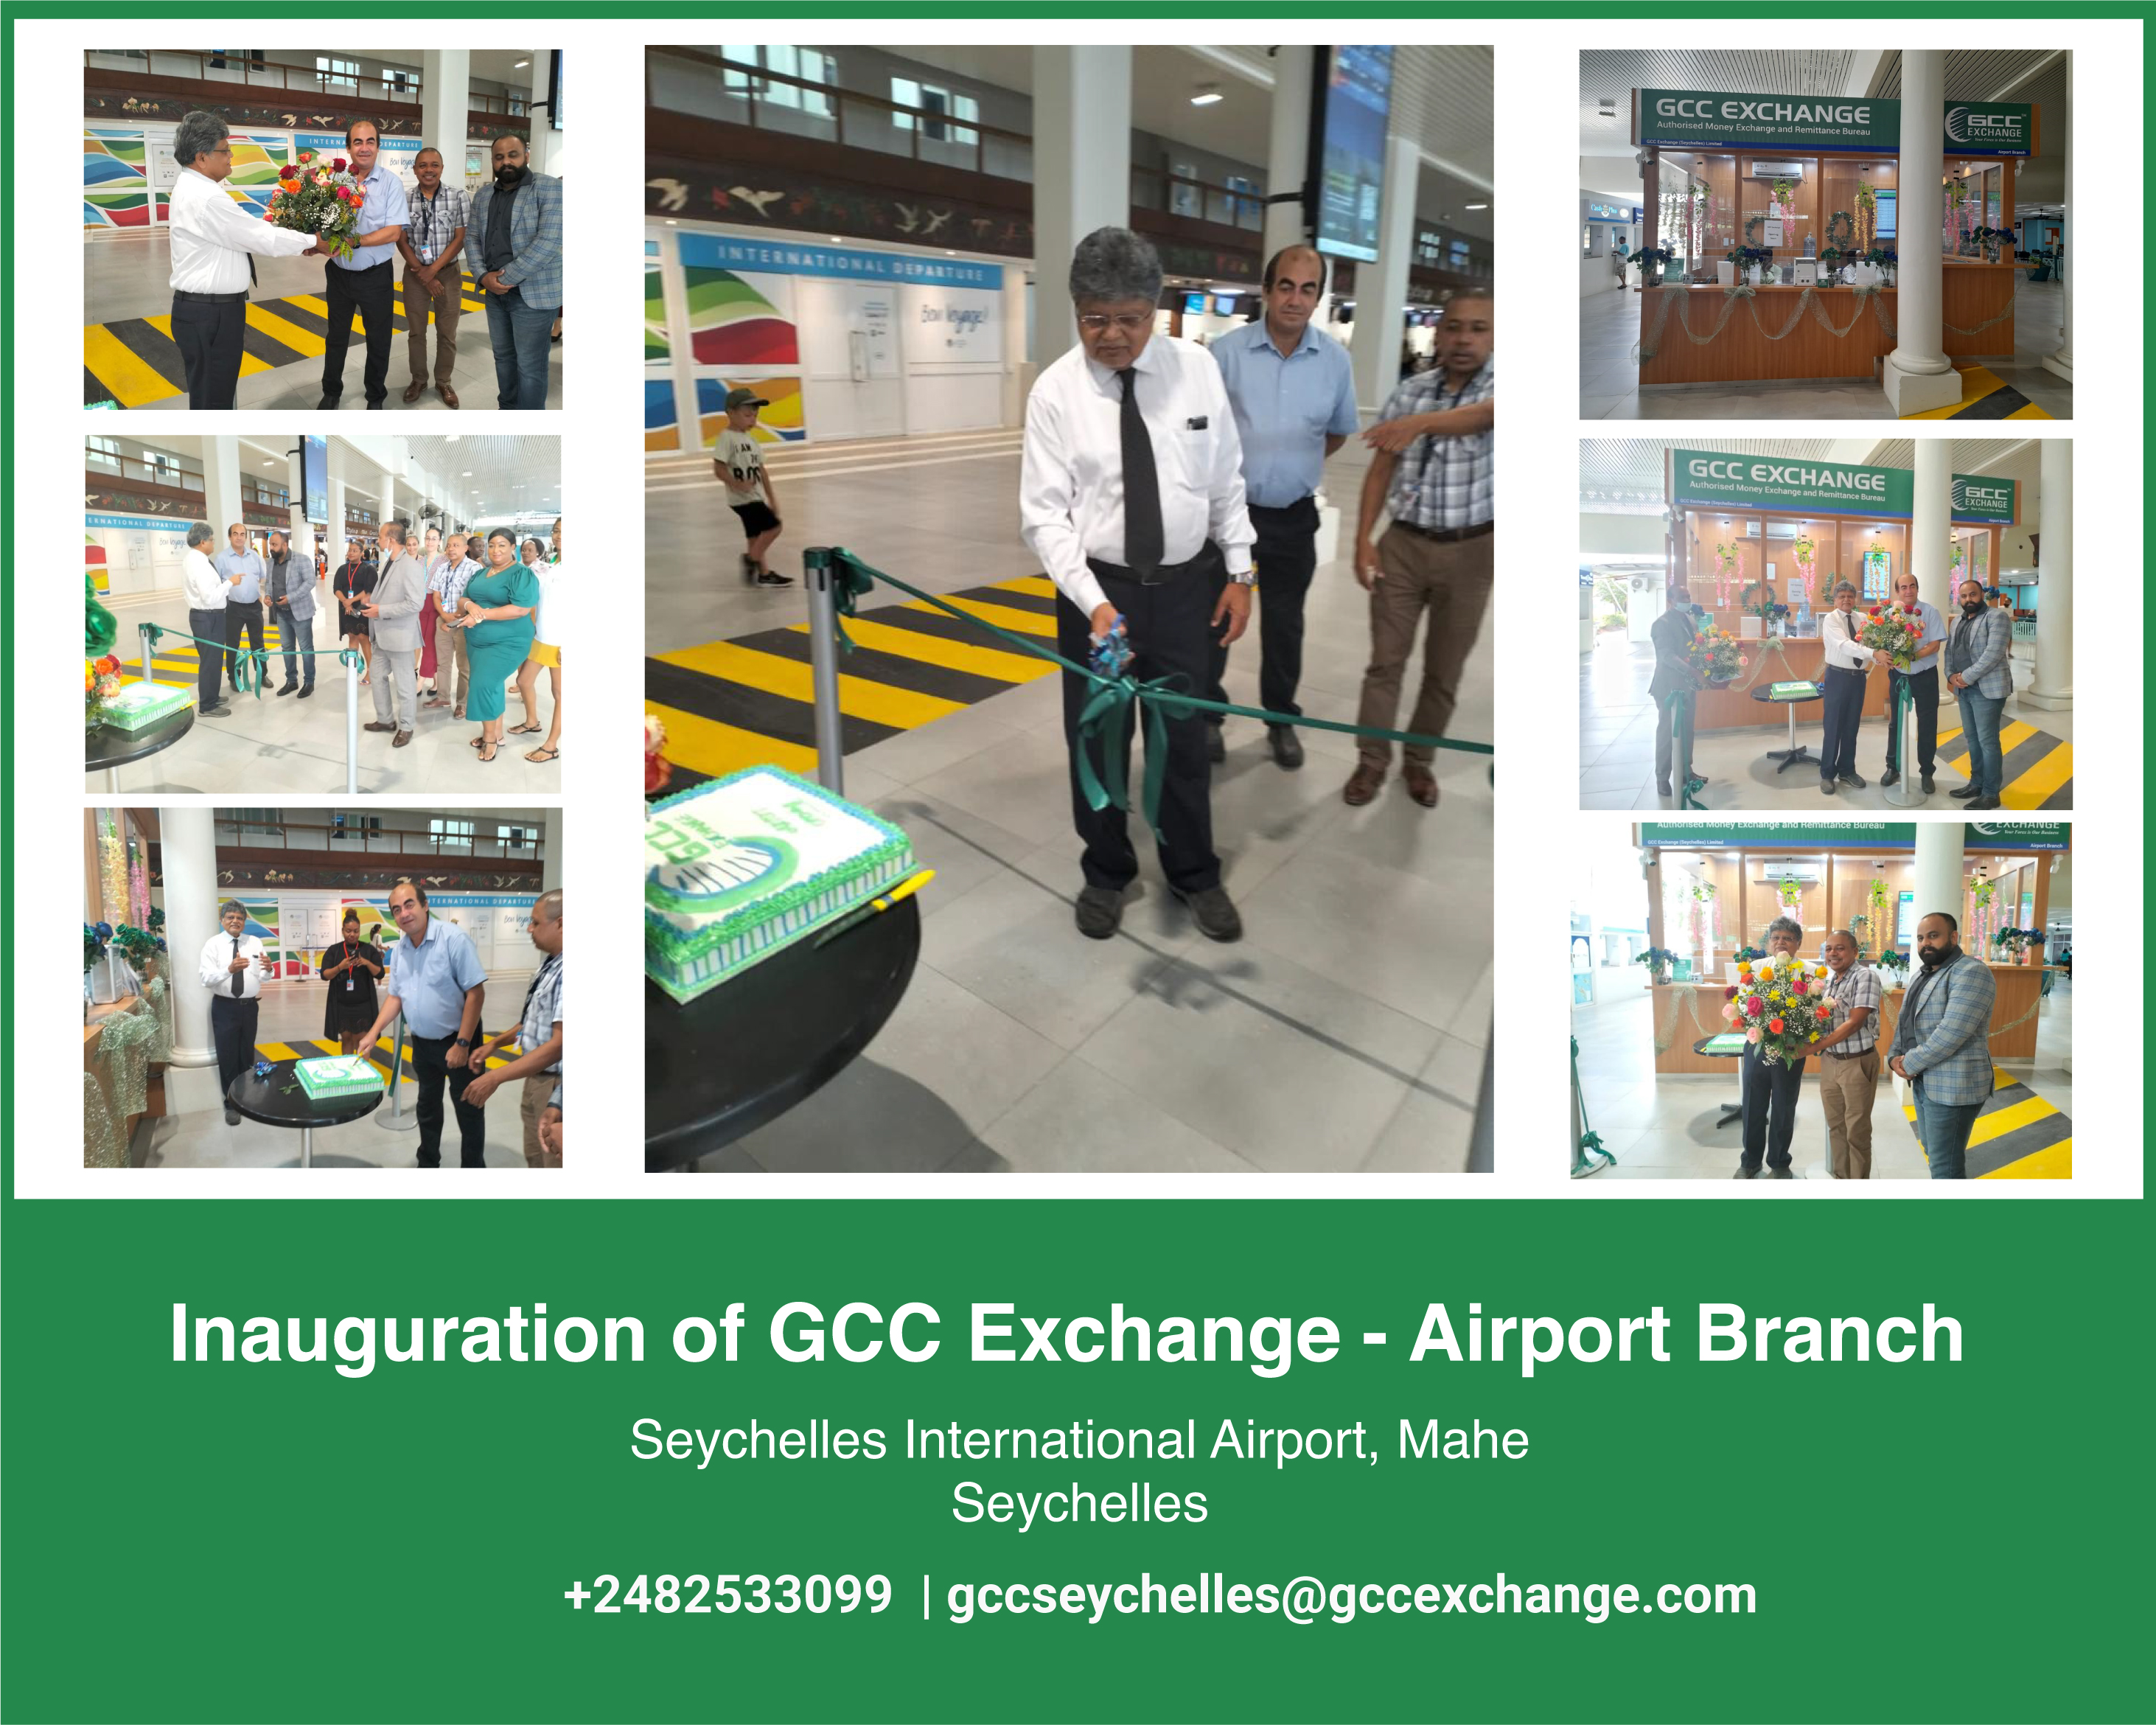 GCC Exchange, now at Seychelles International Airport!